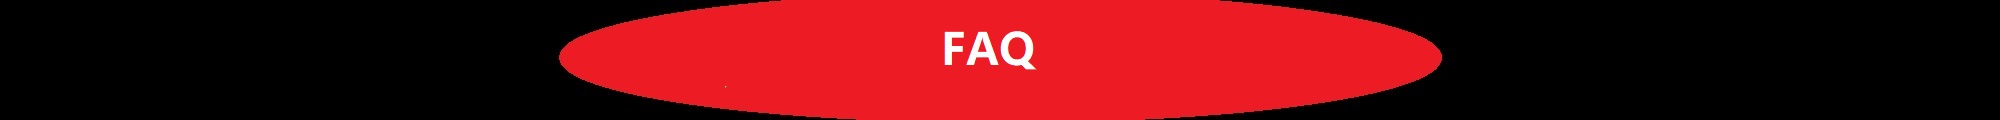 Produkt-FAQ.jpg